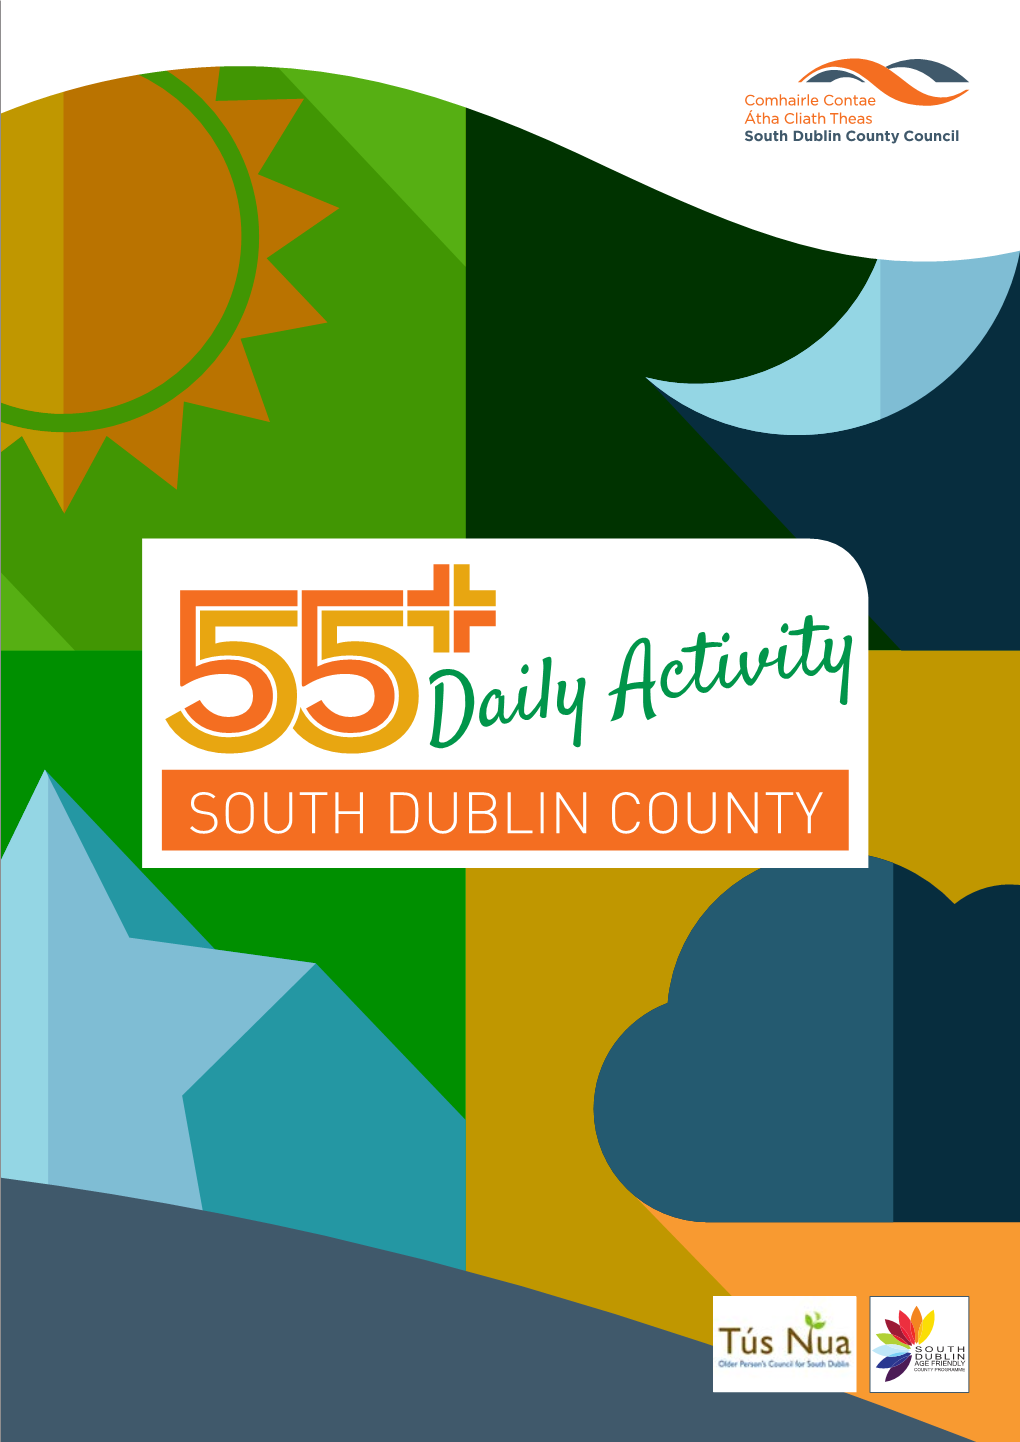 55+ Daily Activity SOUTH DUBLIN COUNTY